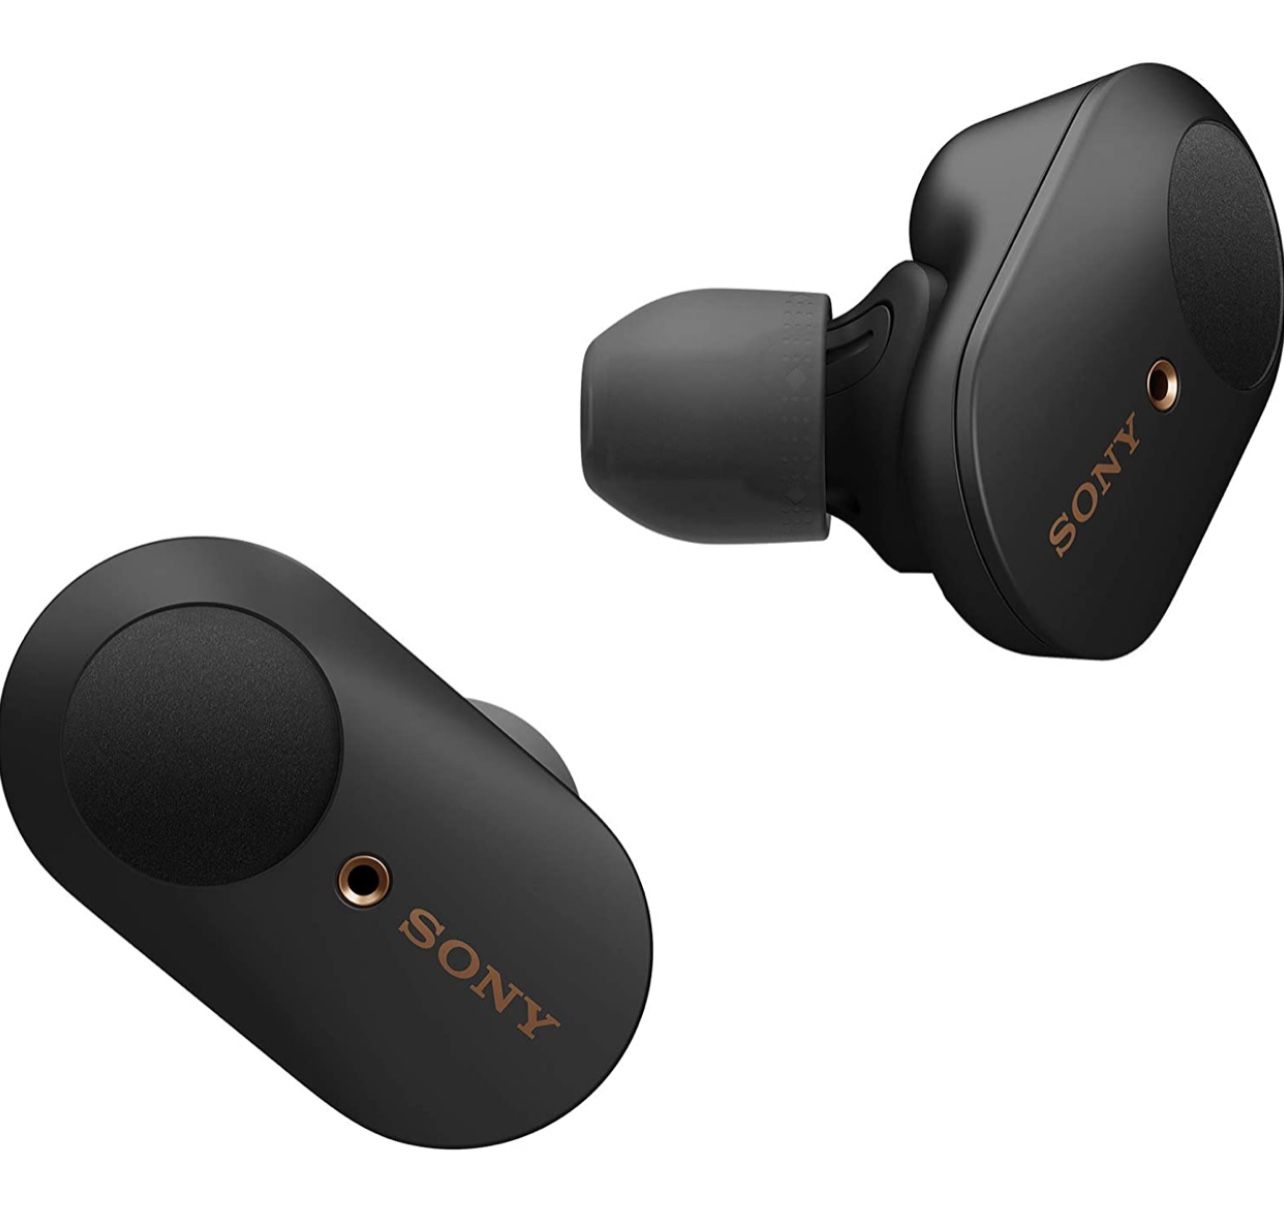 Sony WF-1000XM3 Noise Canceling Wireless Earbuds Headset